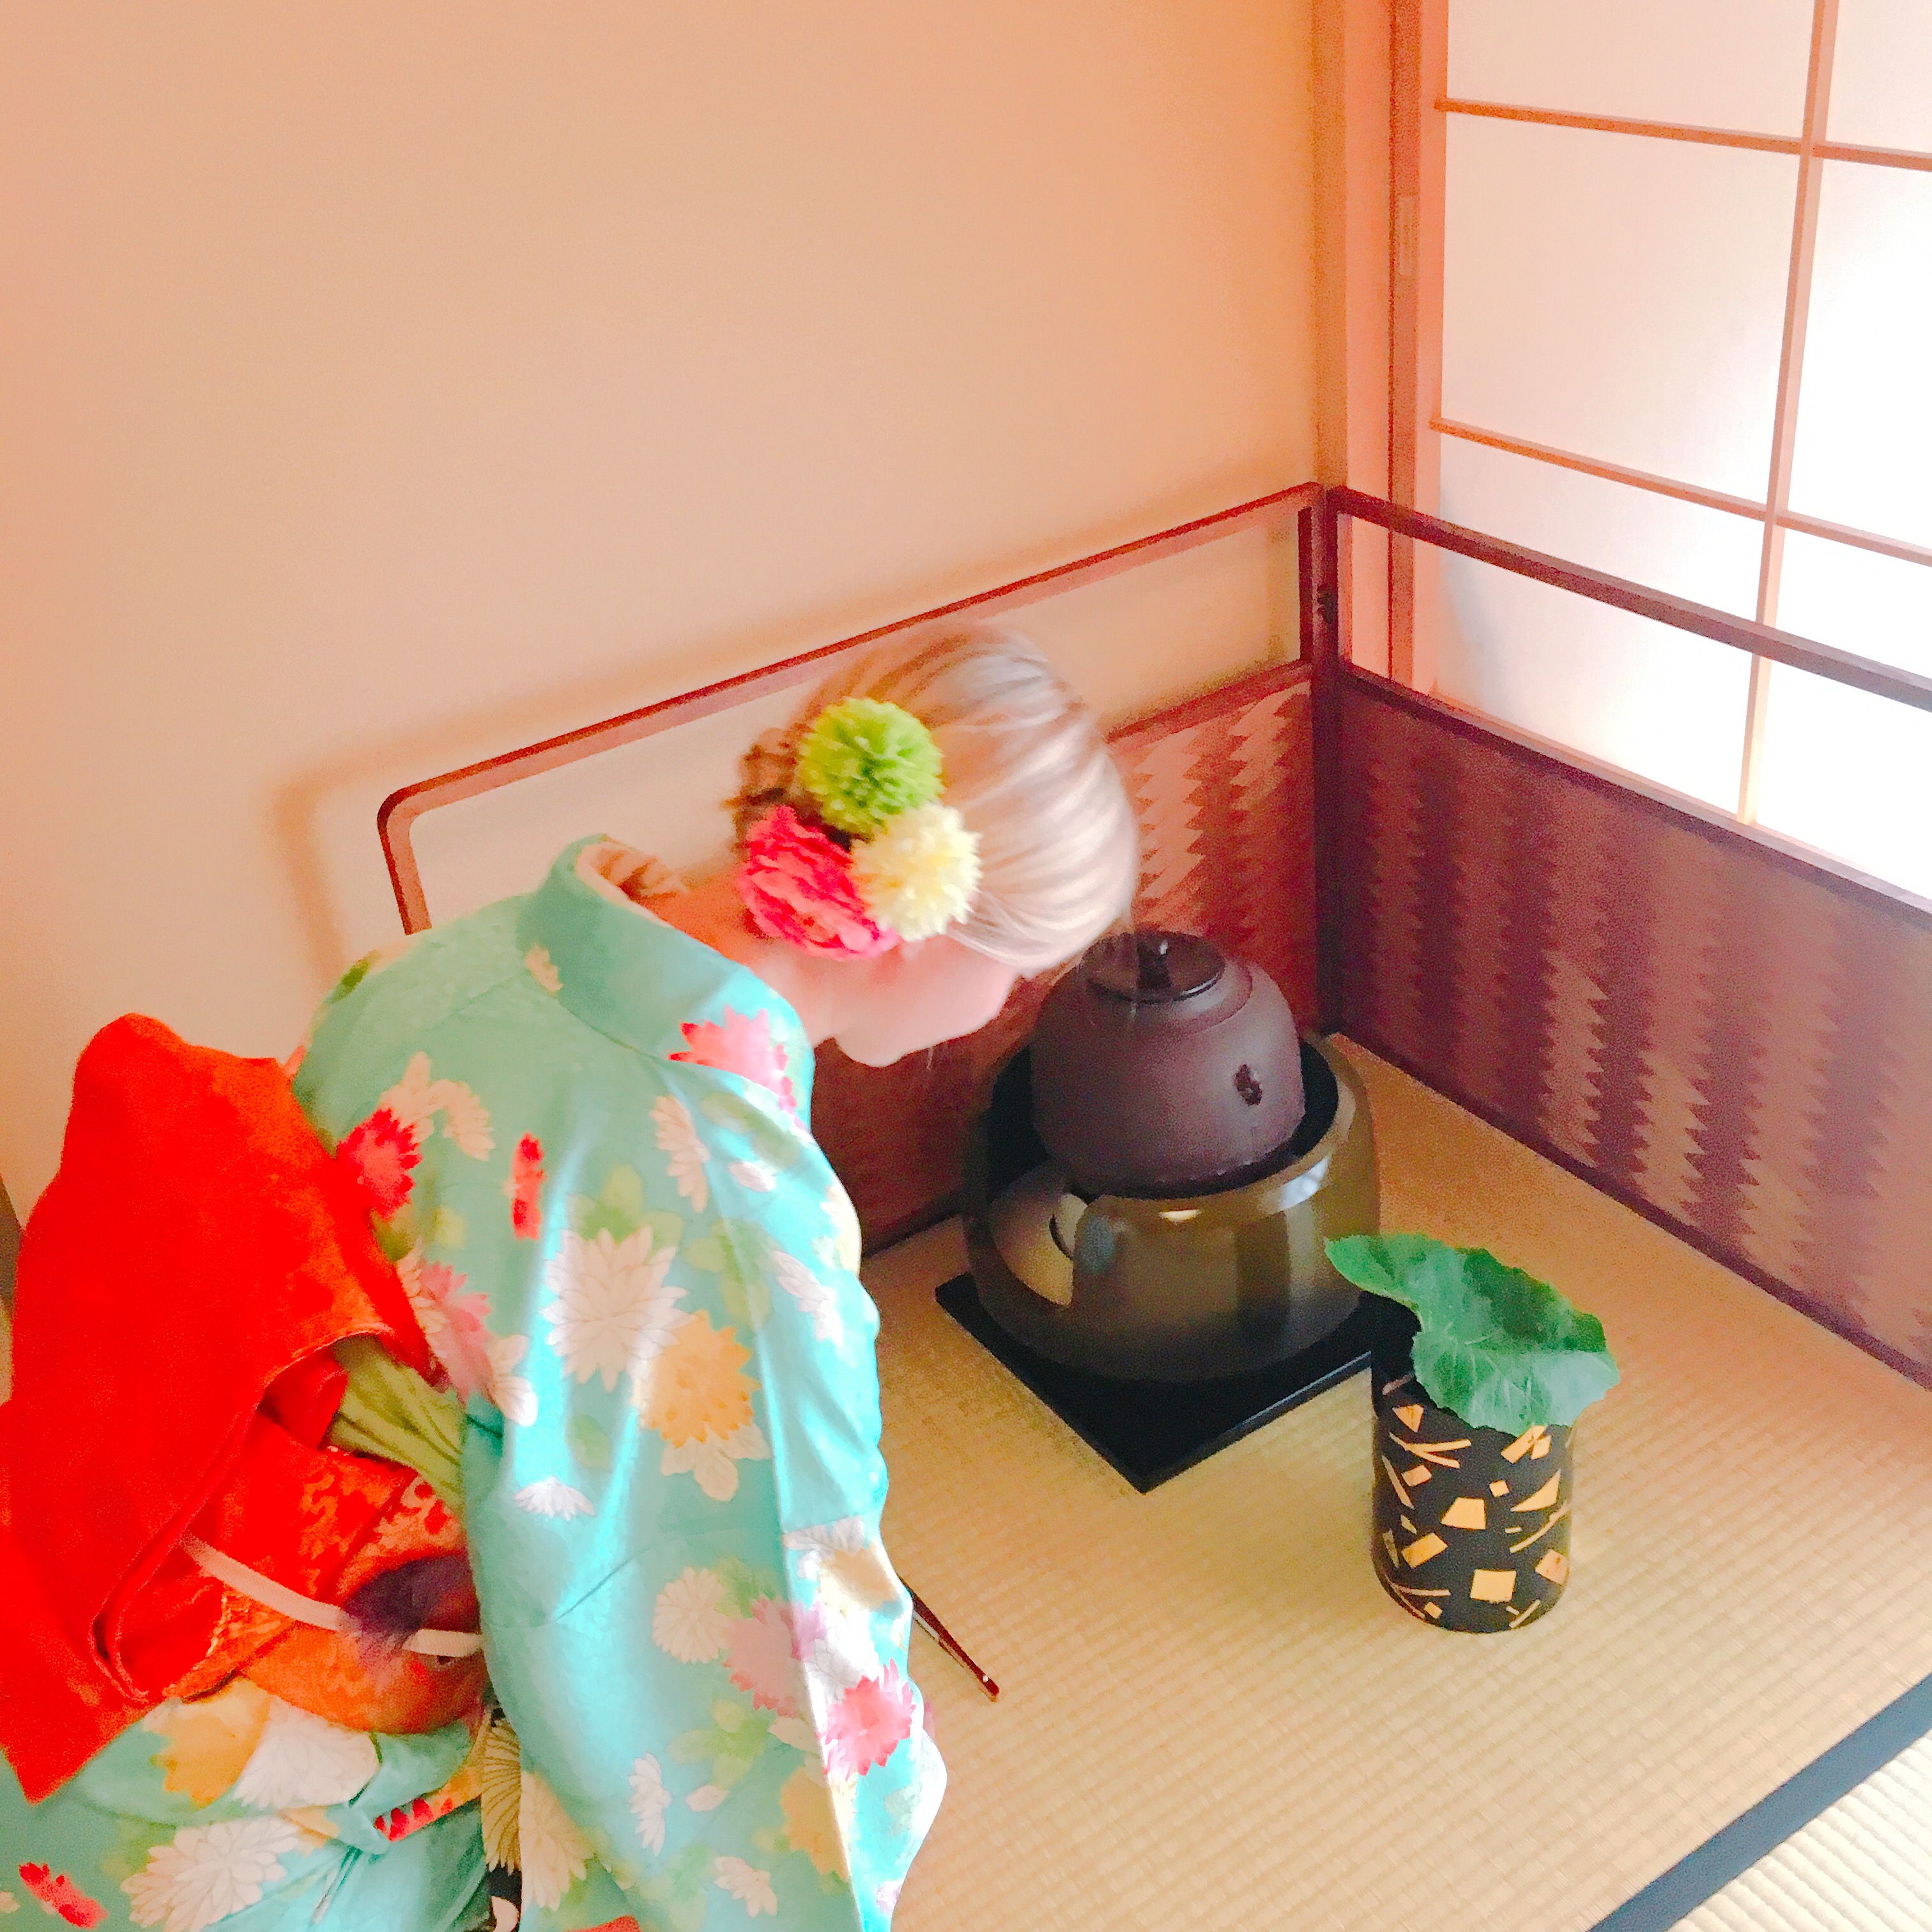 Tea Gathering of July, Tanabata